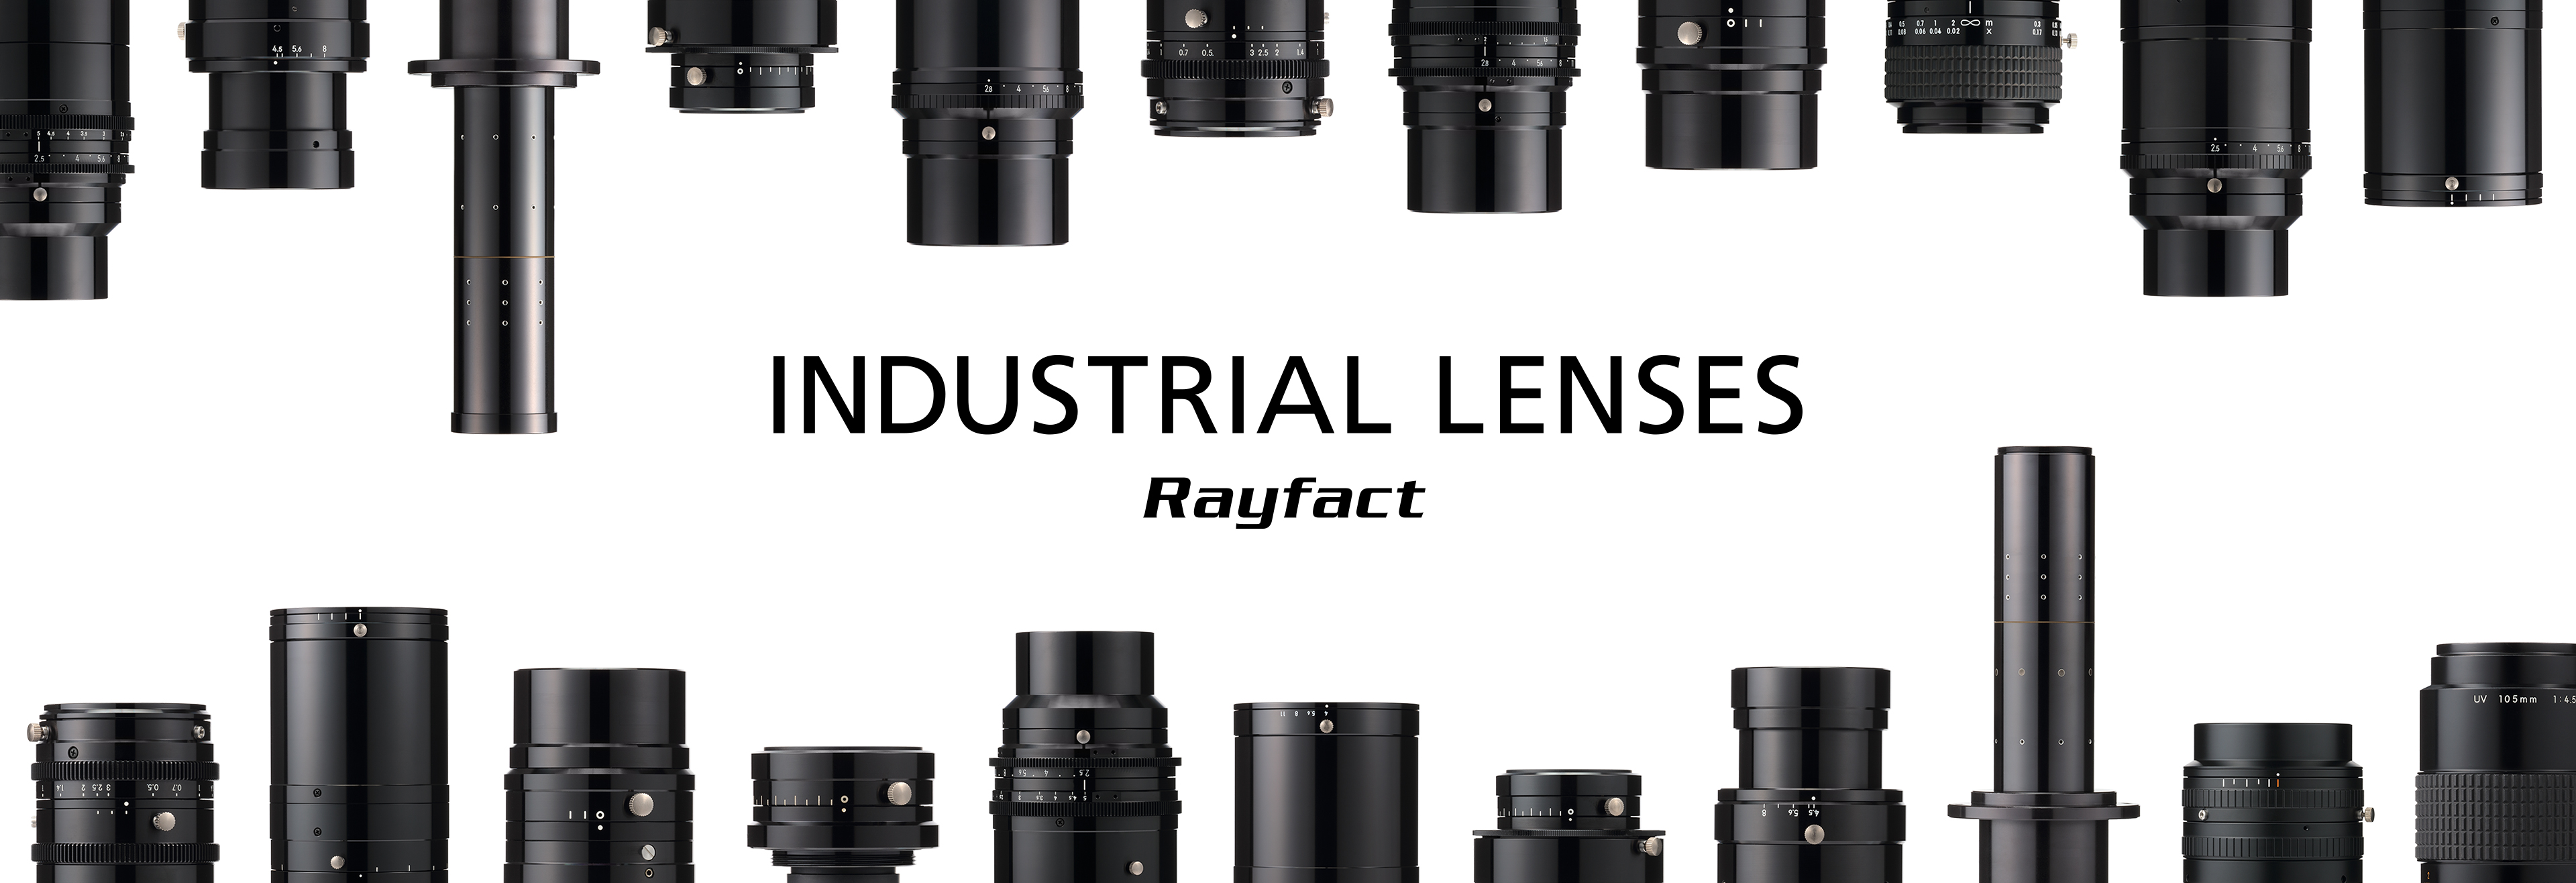 Industrial Lenses Rayfact